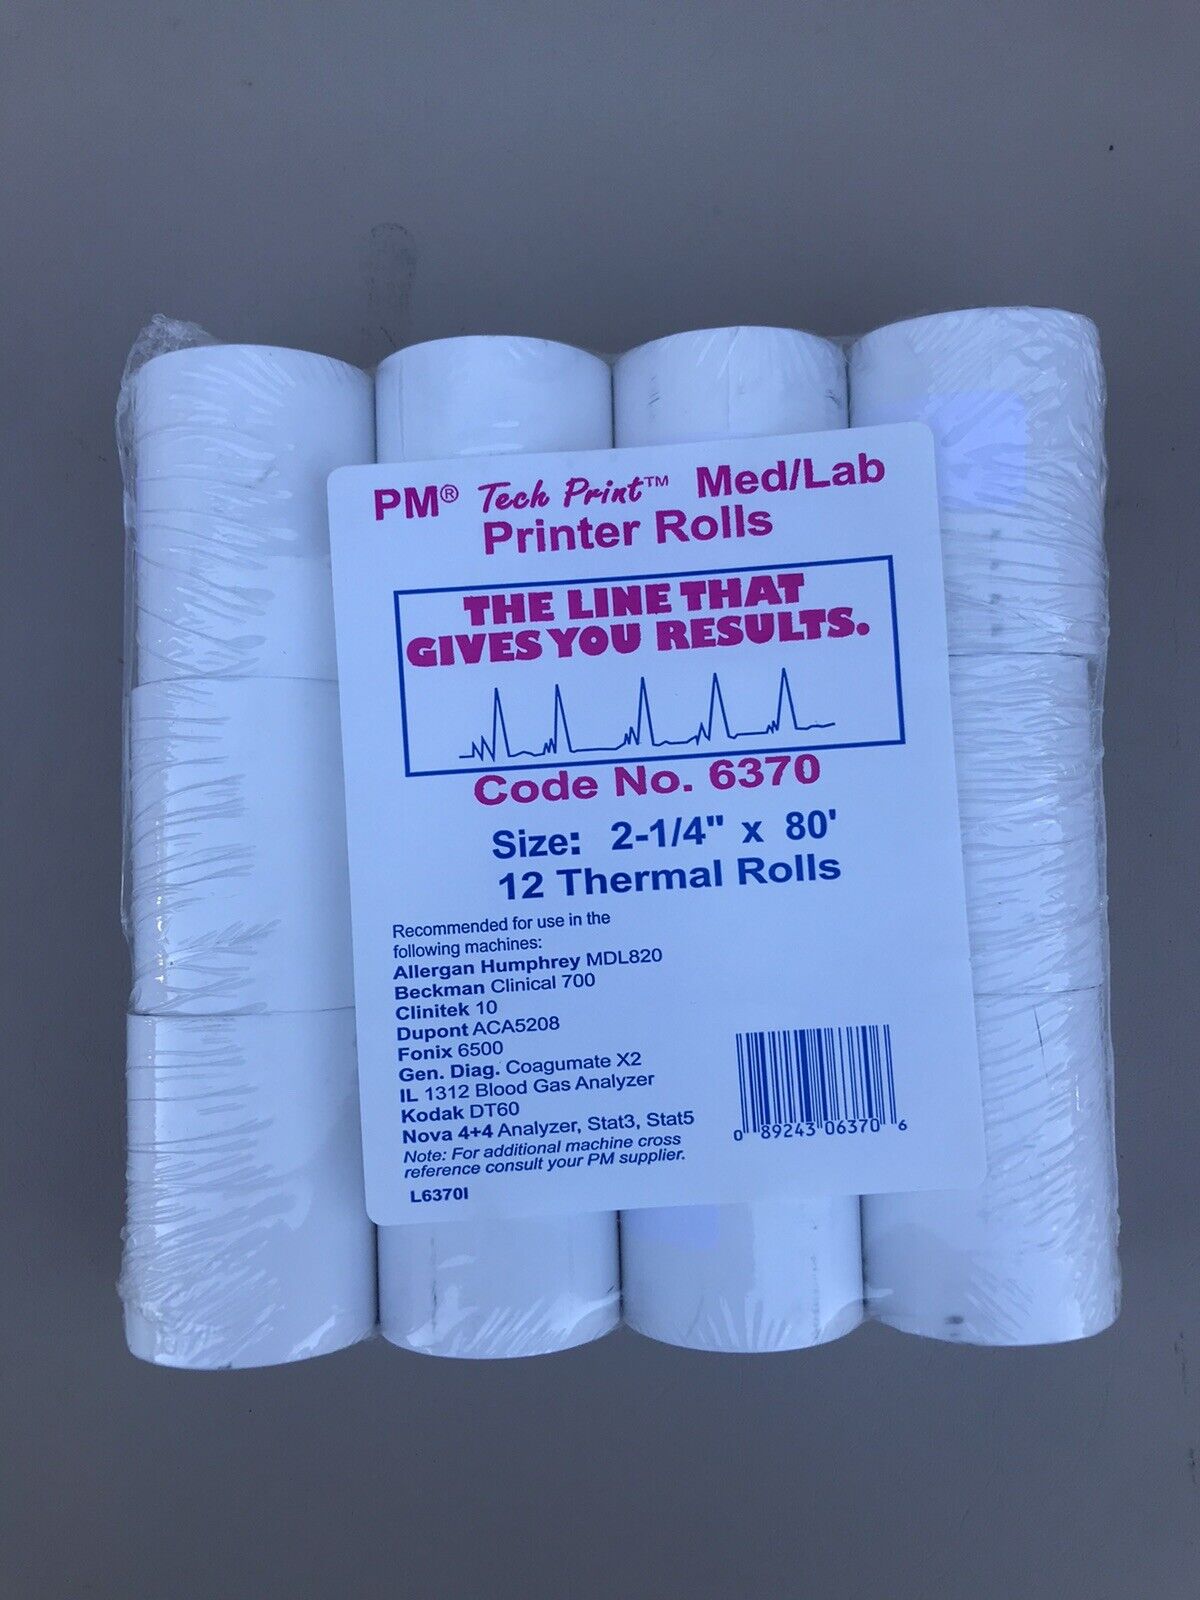 pM Tech Print Med/Lap Printer  Rolls Size 2-1/4” X 80 12 Thermal Rolls